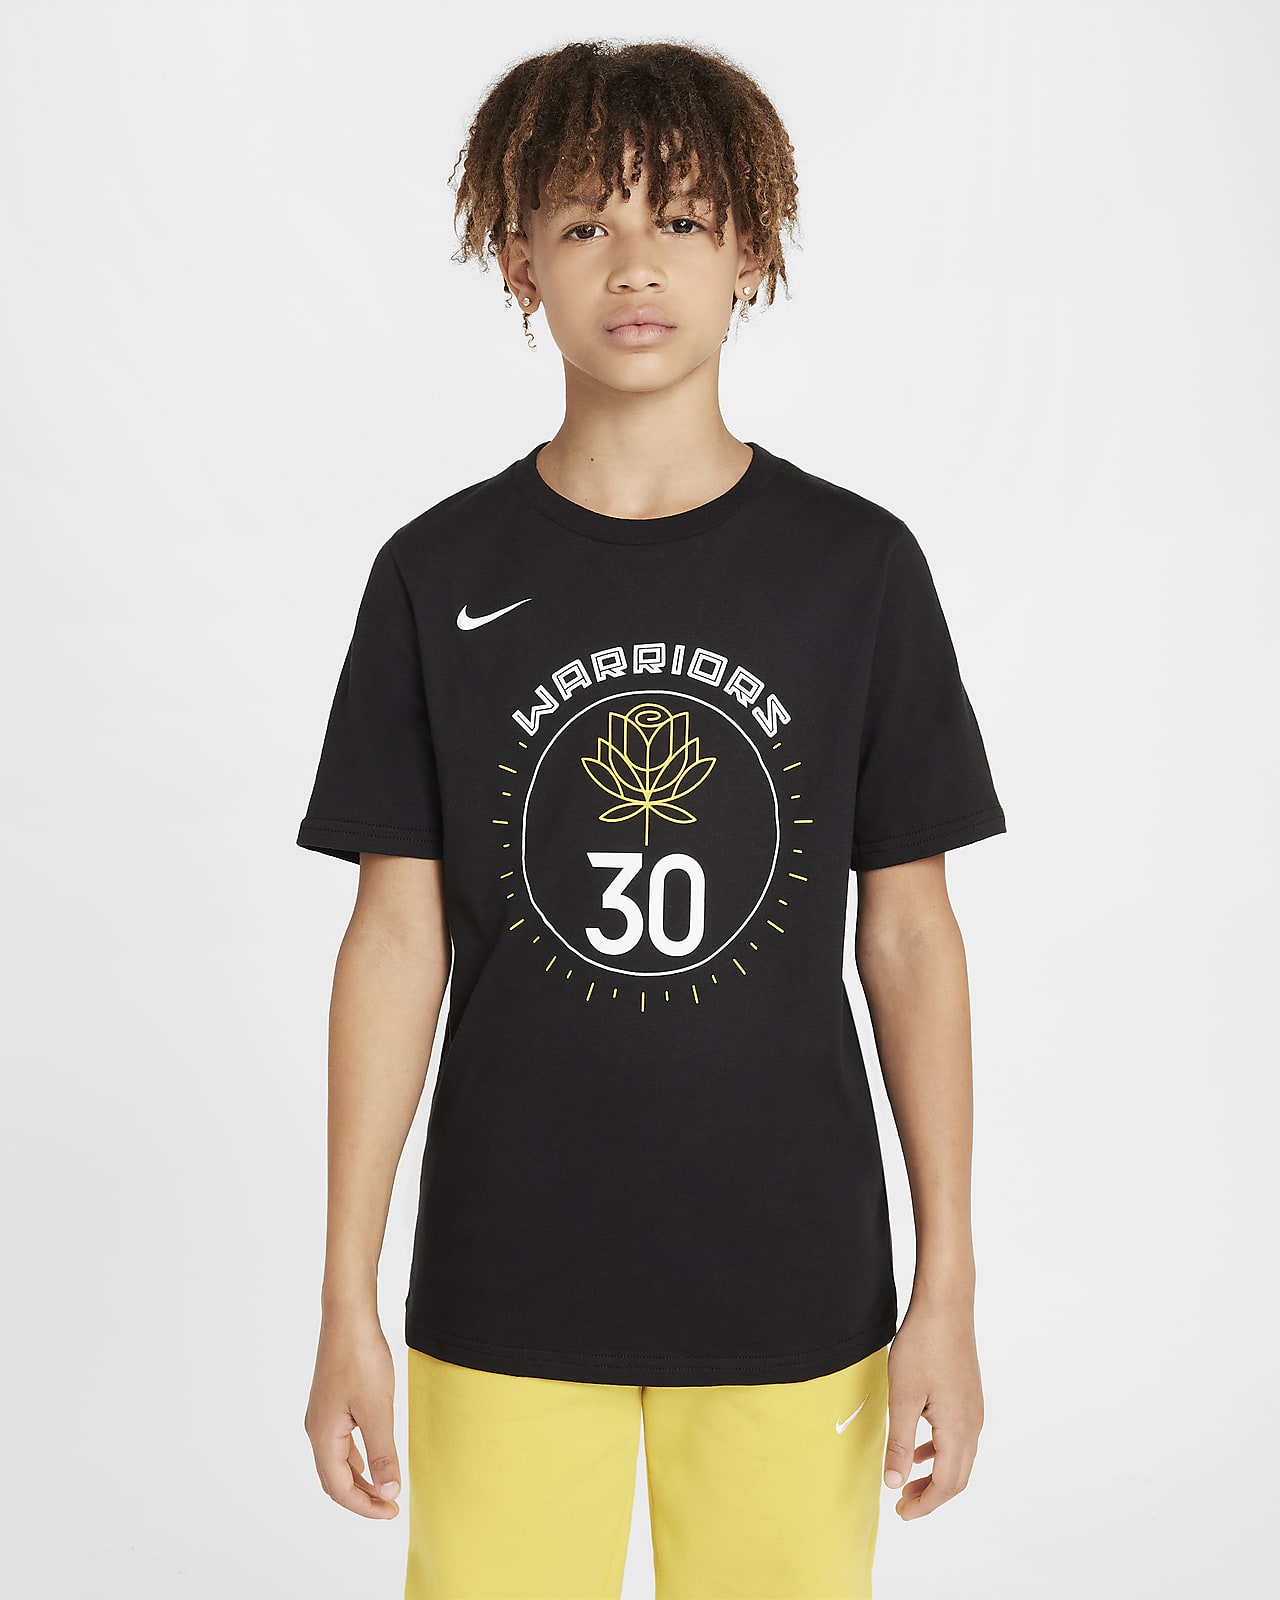 Golden State Warriors City Edition Nike NBA-shirt voor kids